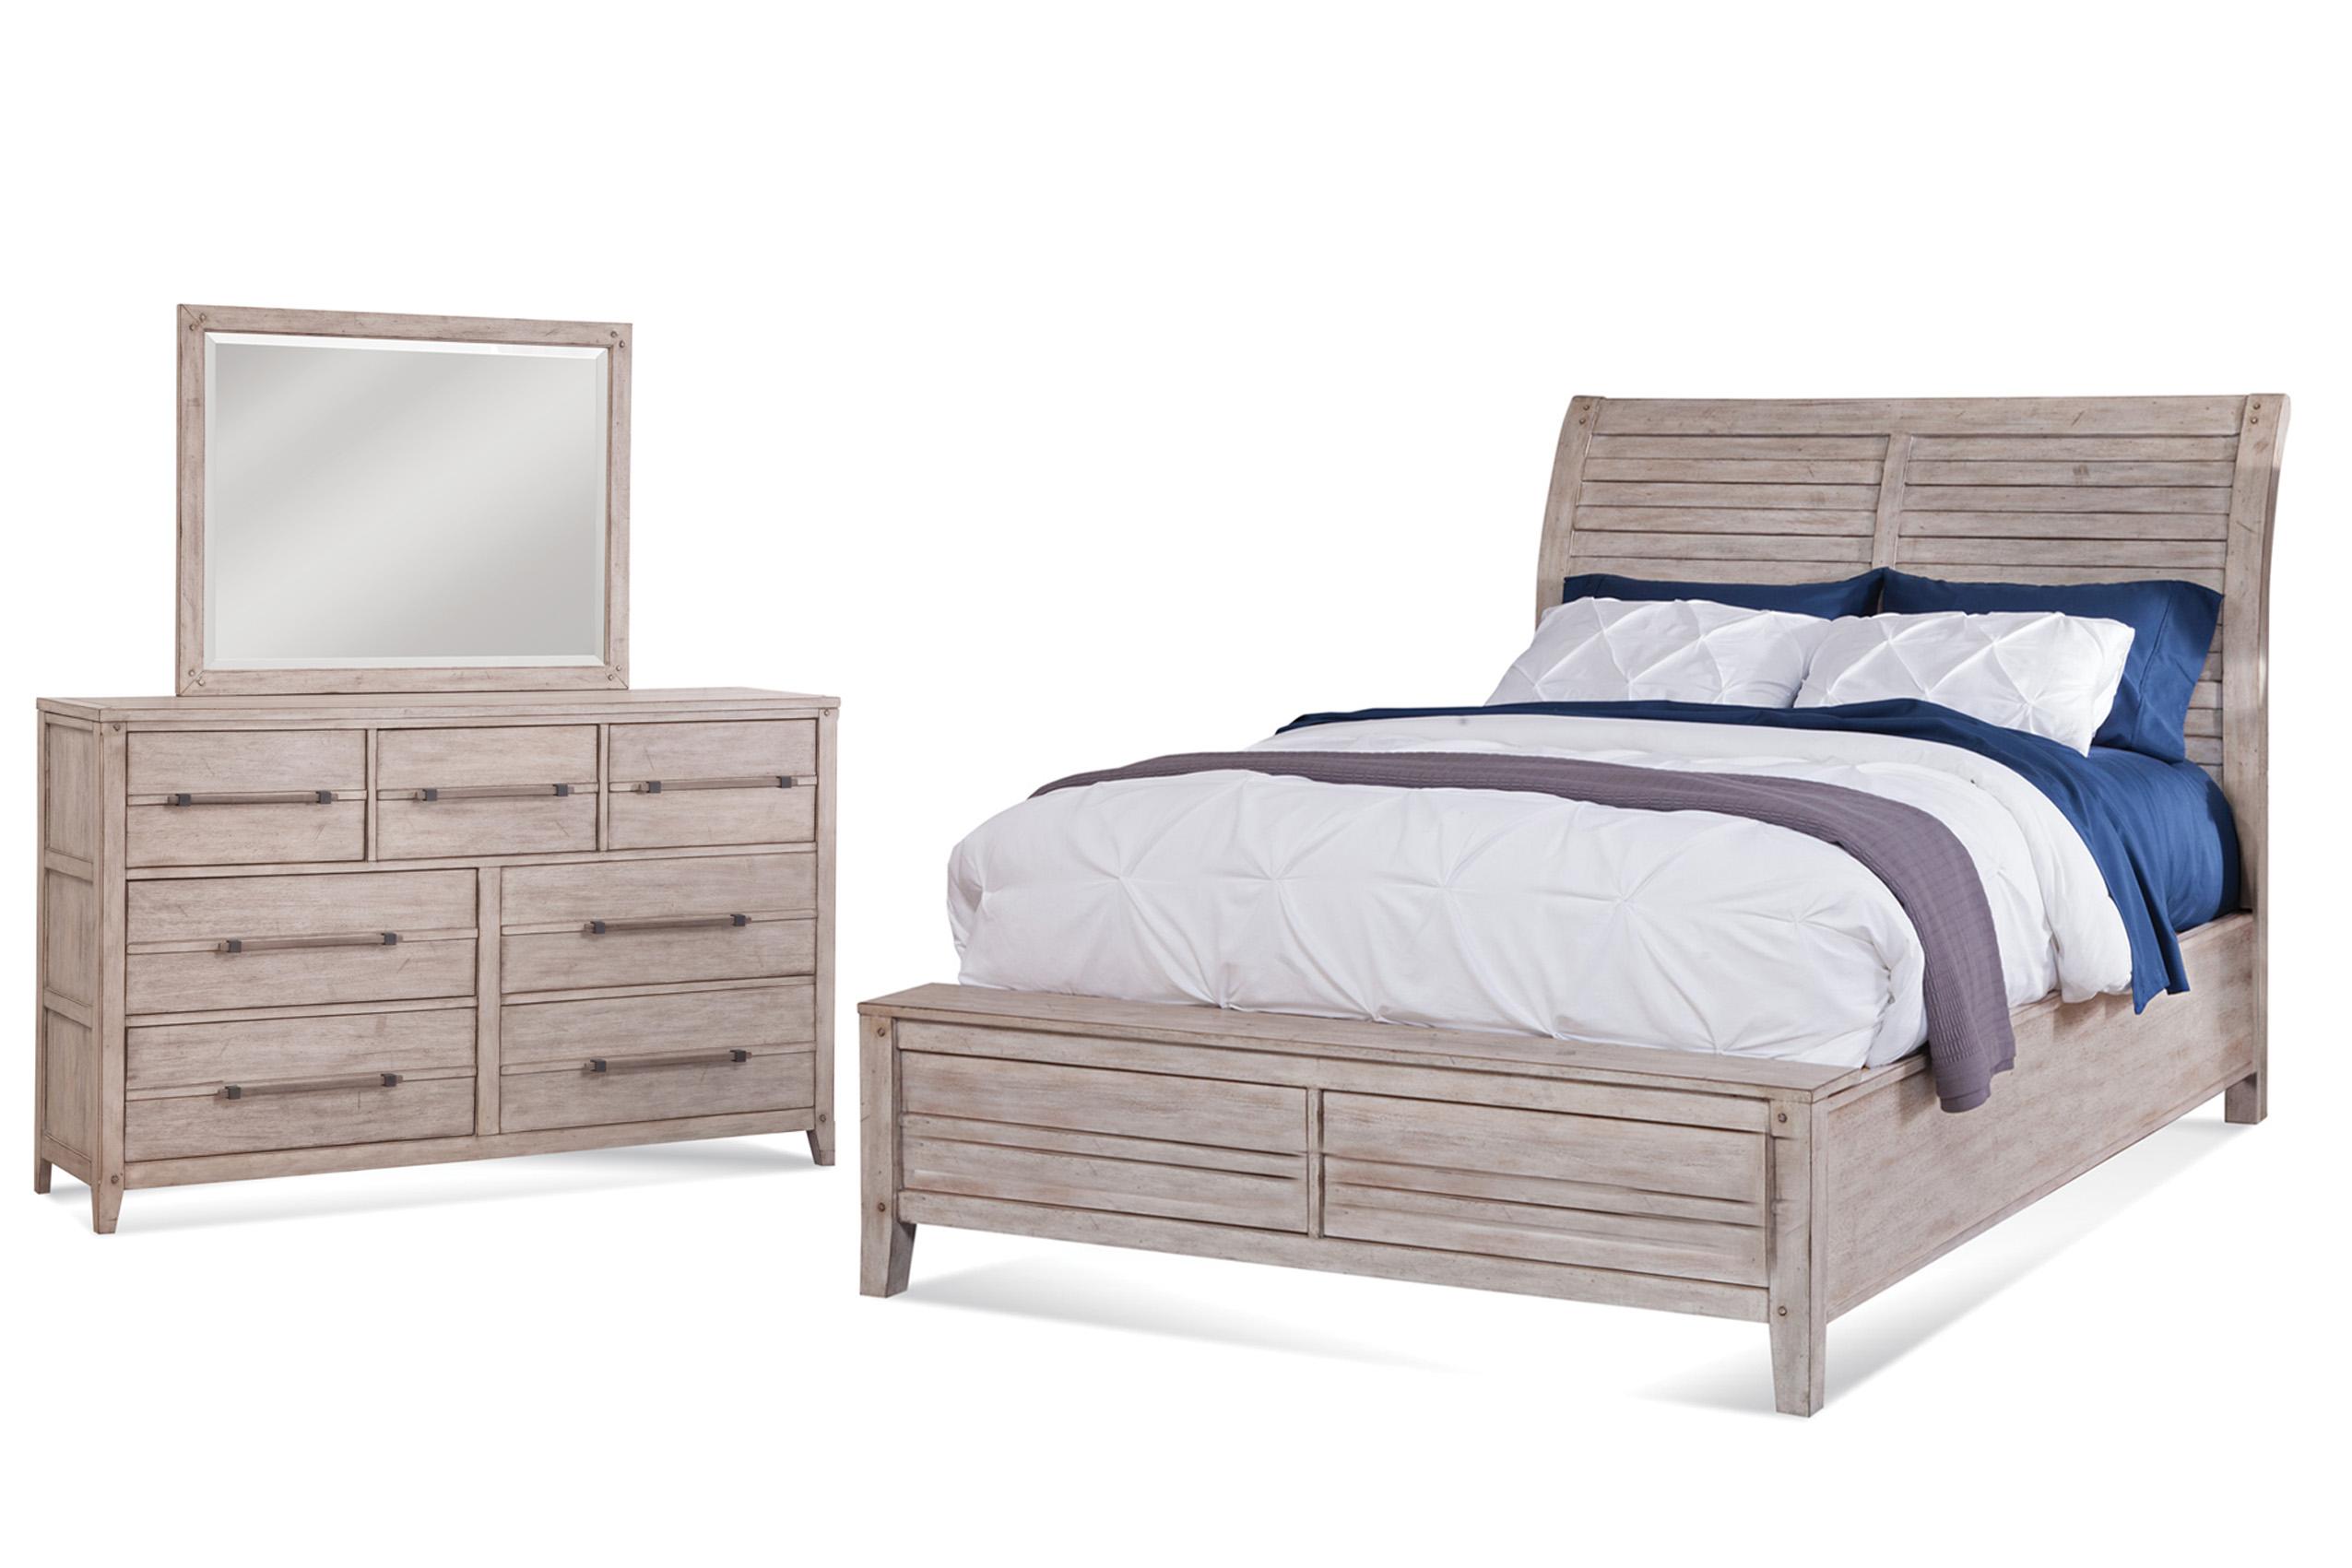 Classic, Traditional Sleigh Bedroom Set AURORA 2810-50SLP 2810-QSLPN-3PC in whitewash 